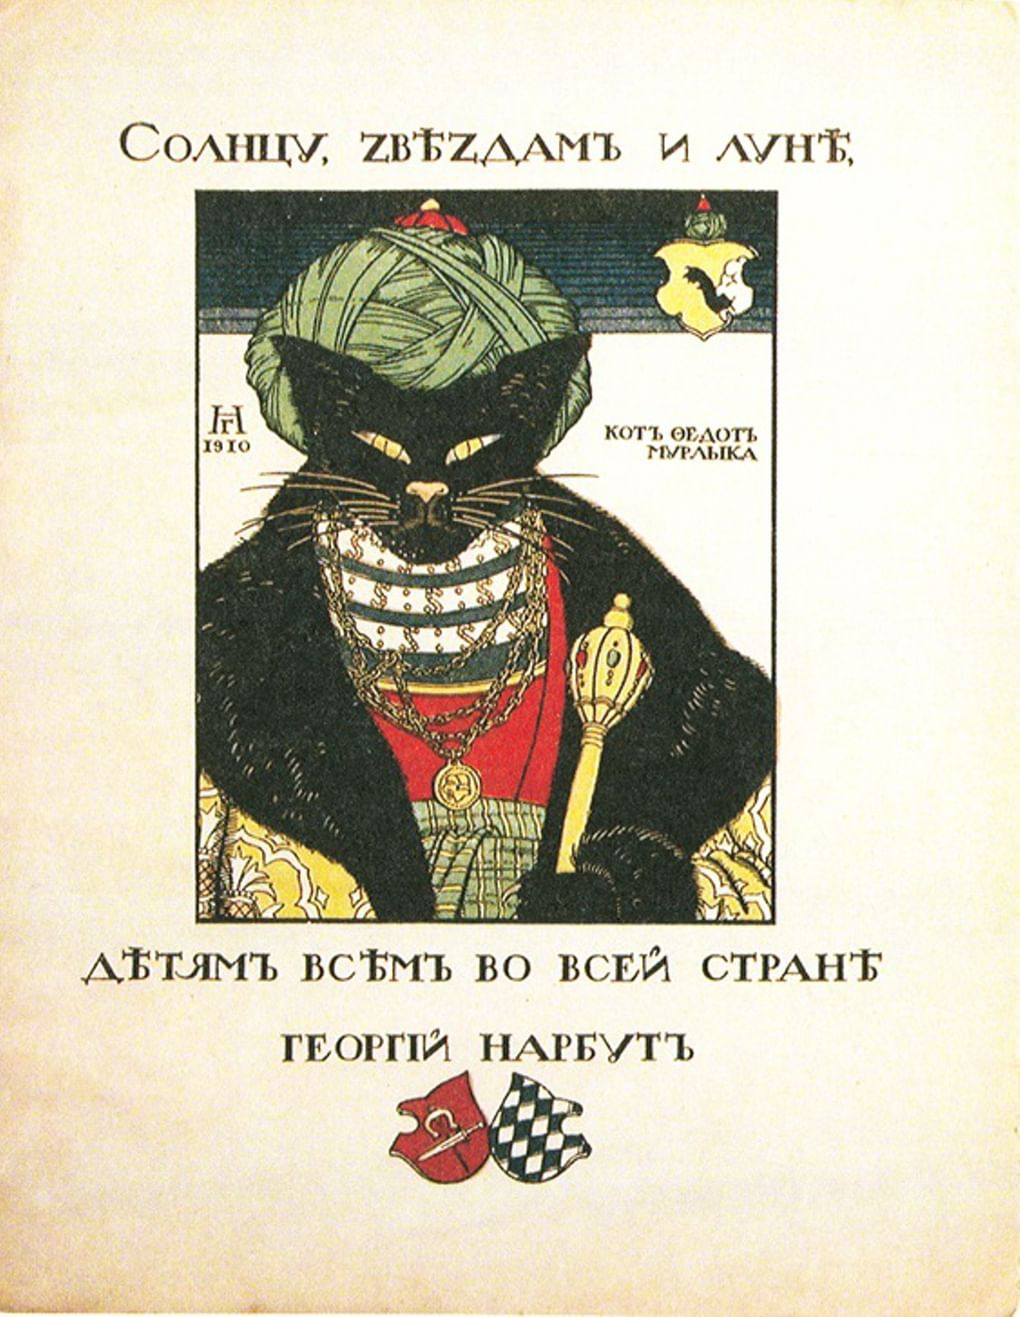 Георгий Нарбут. Похороны кота. Иллюстрация. 1910